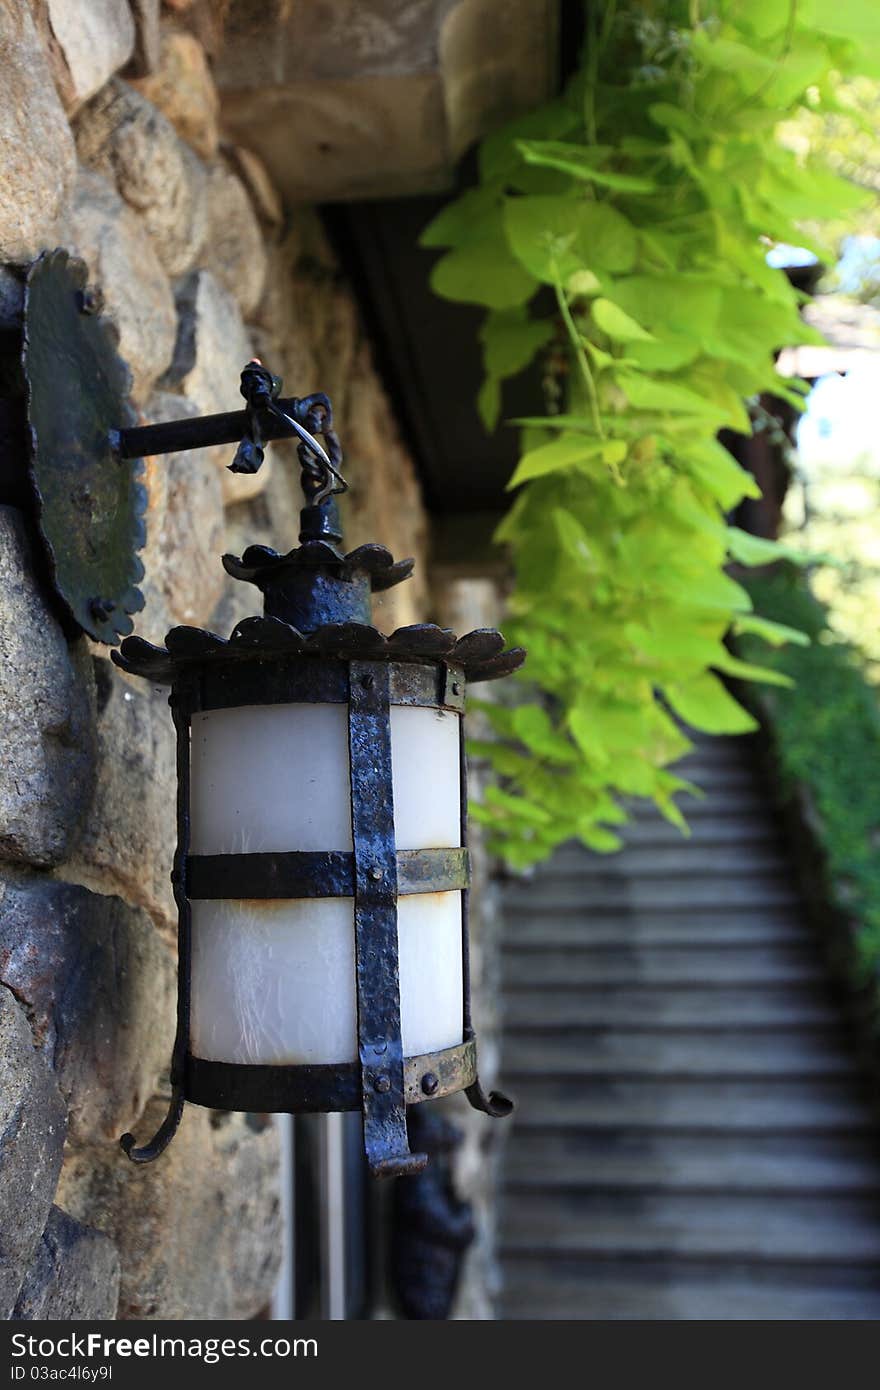 Lamp mounted on stone wall. Lamp mounted on stone wall